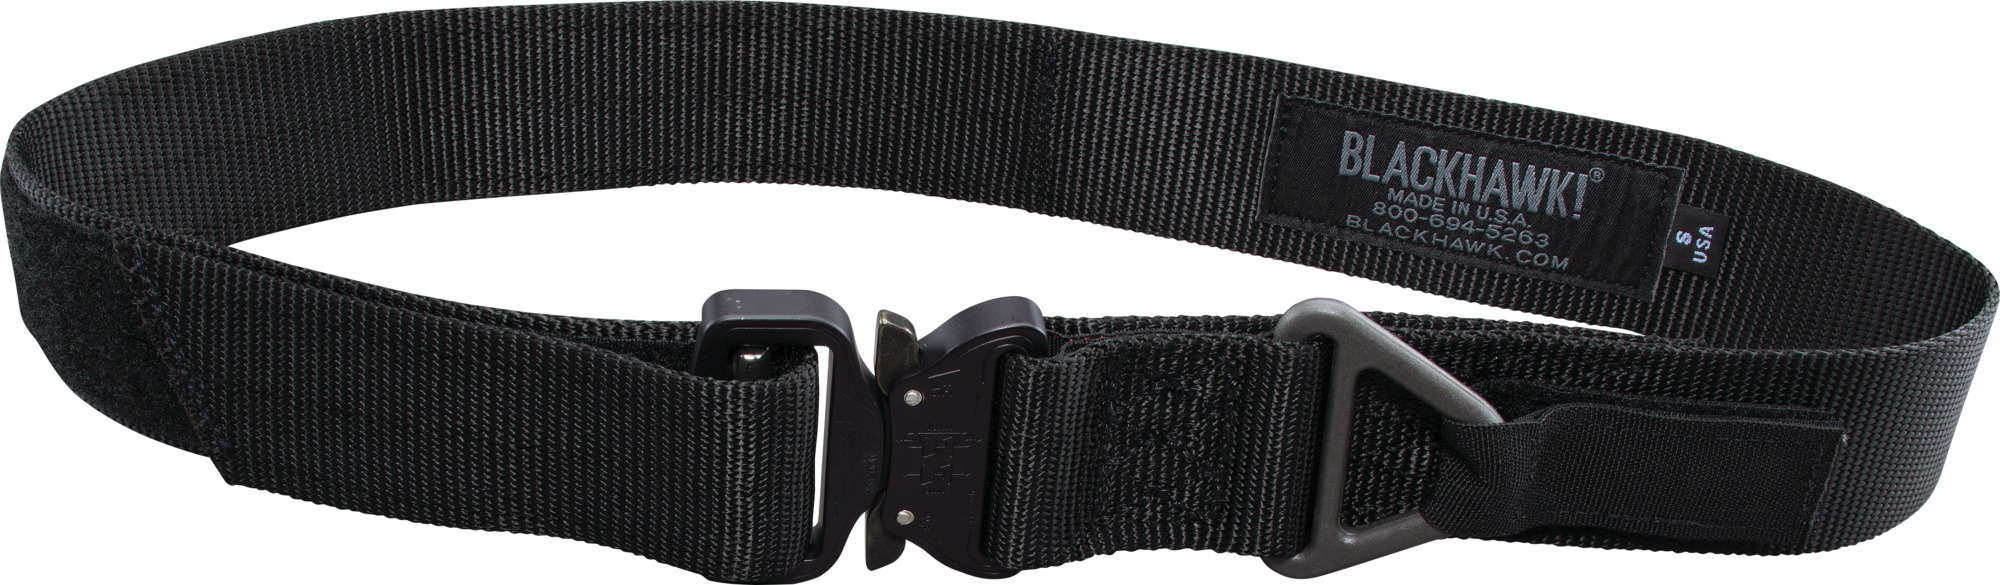 Rigger's Belt with Cobra Buckle